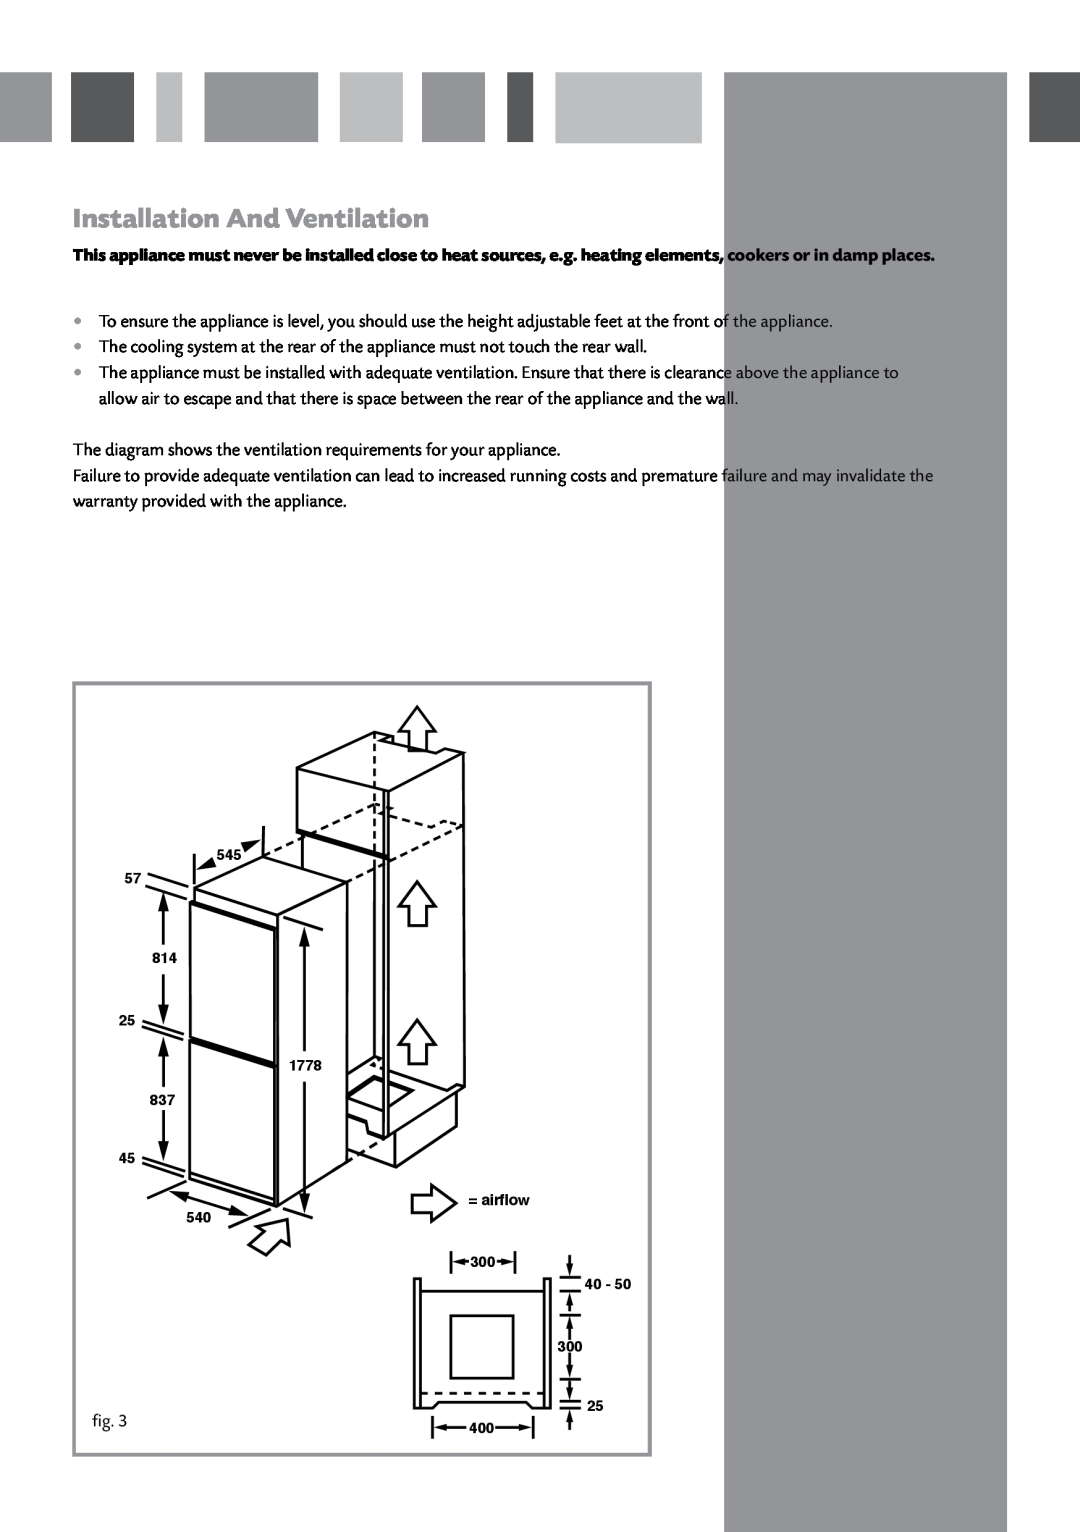 CDA CW897 manual Installation And Ventilation 